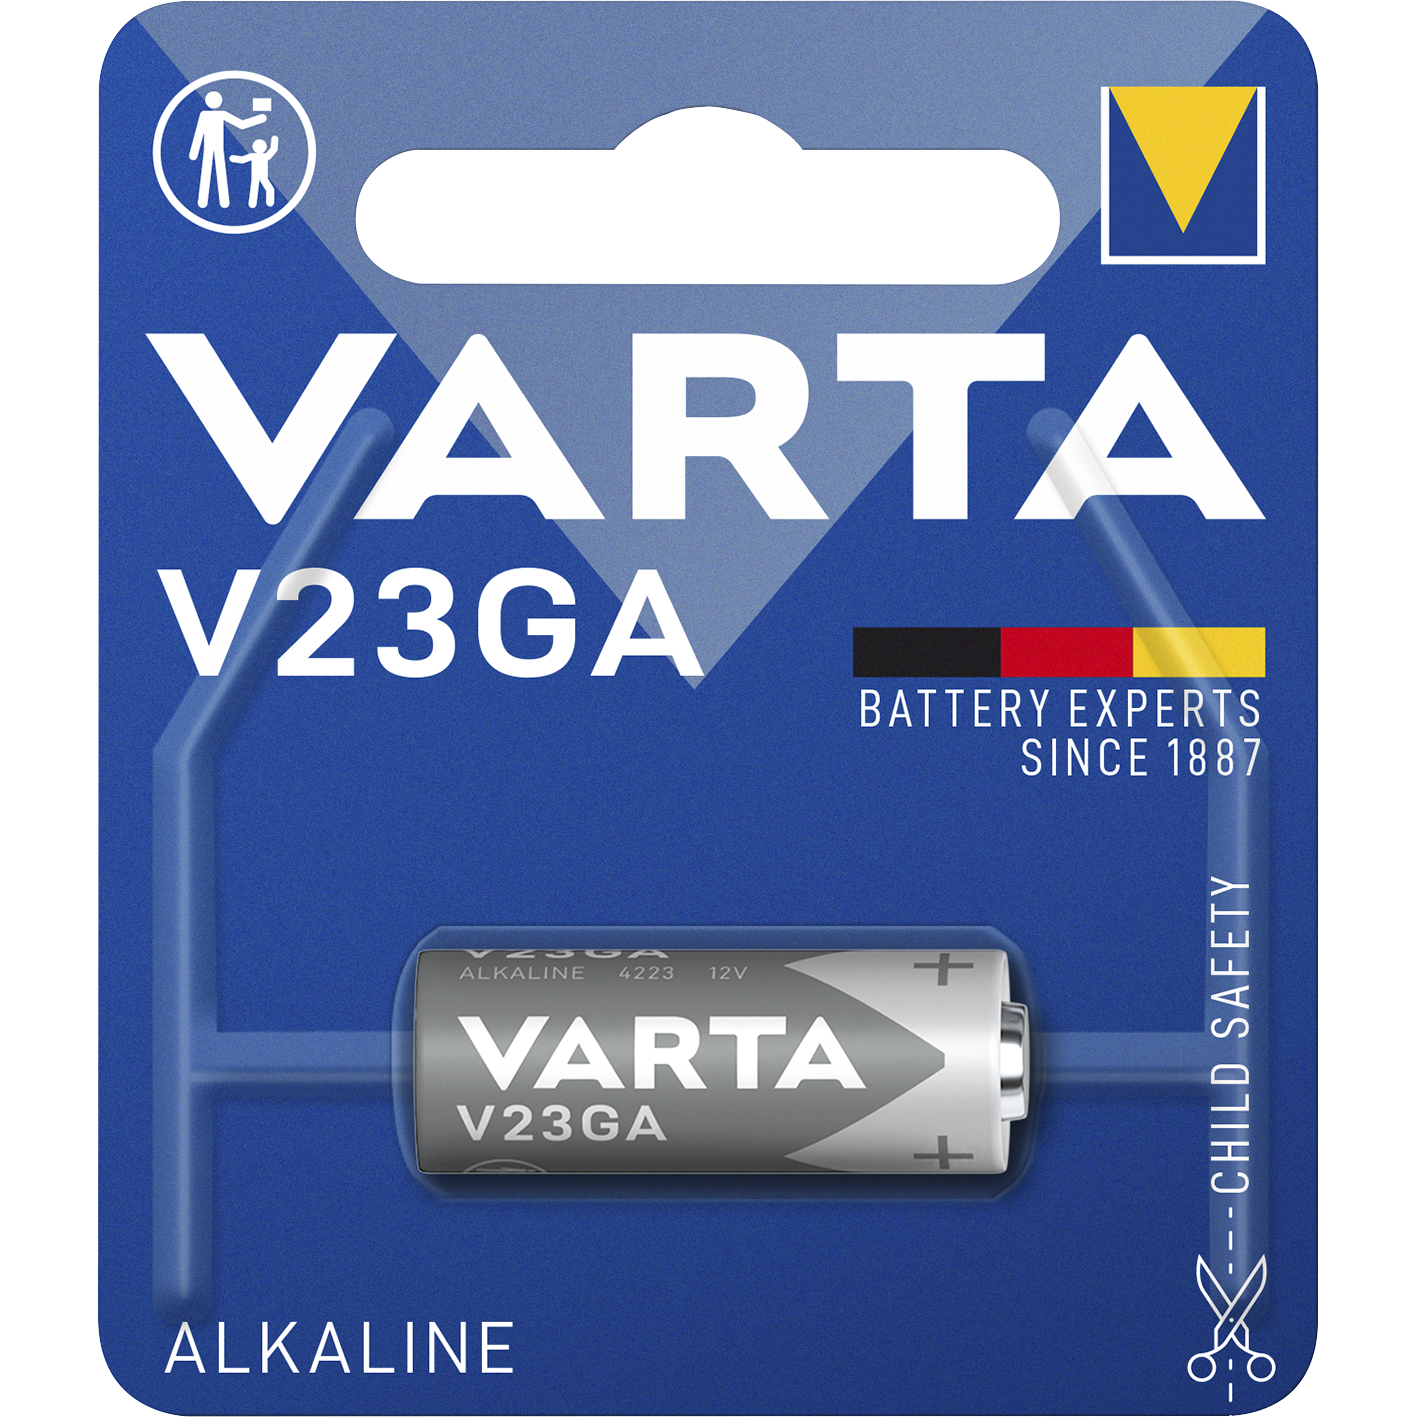 Batterie VARTA ''Electronics'', MN21, V23GA, 12V, 28x10mm Alkaline